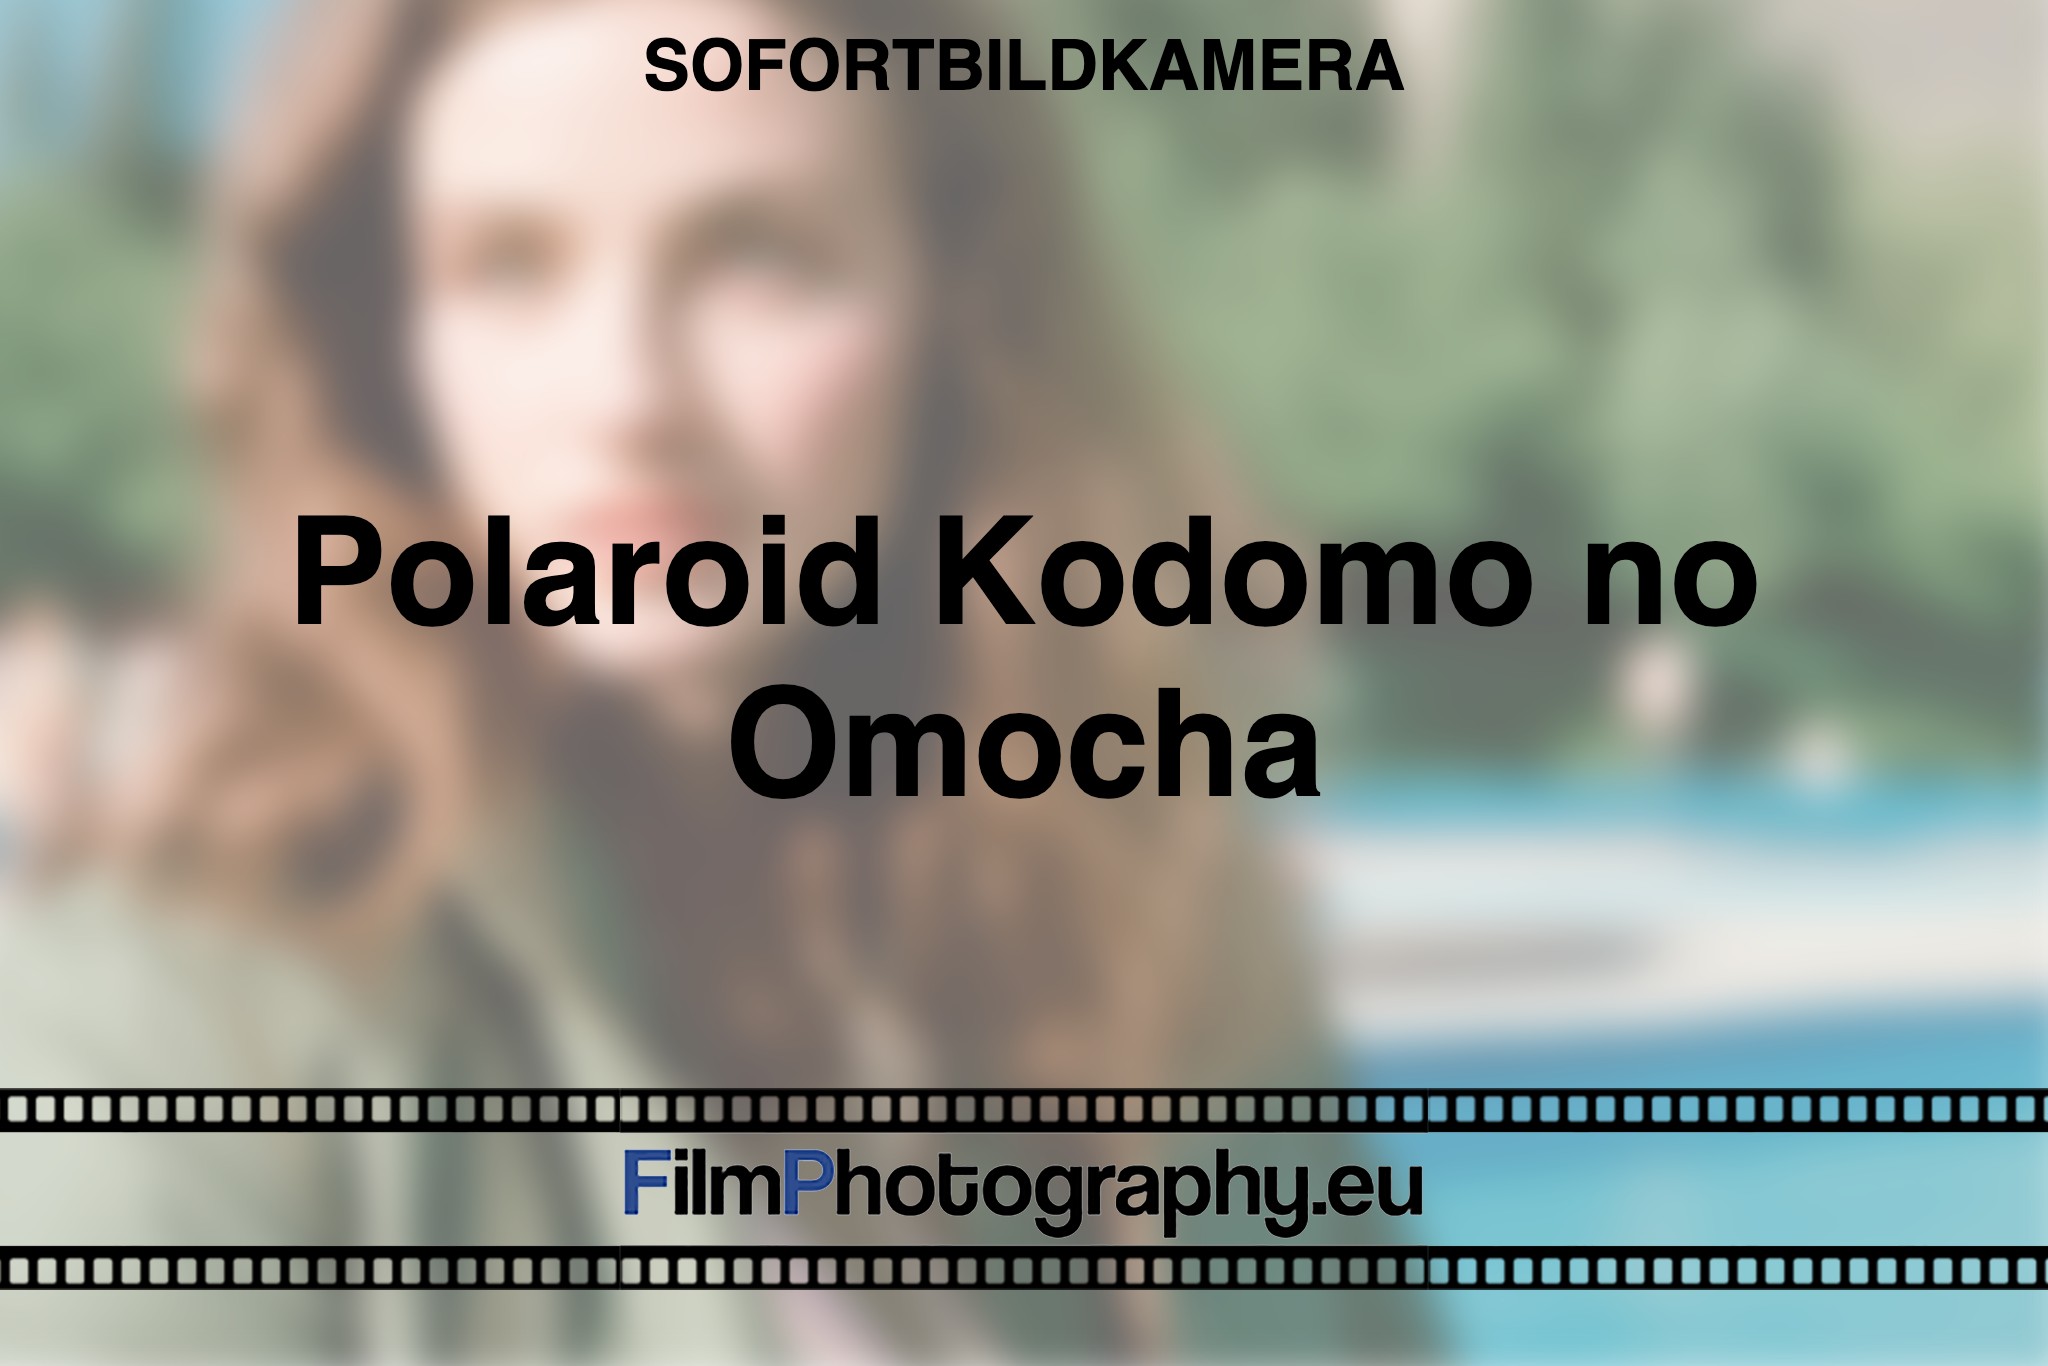 polaroid-kodomo-no-omocha-sofortbildkamera-bnv